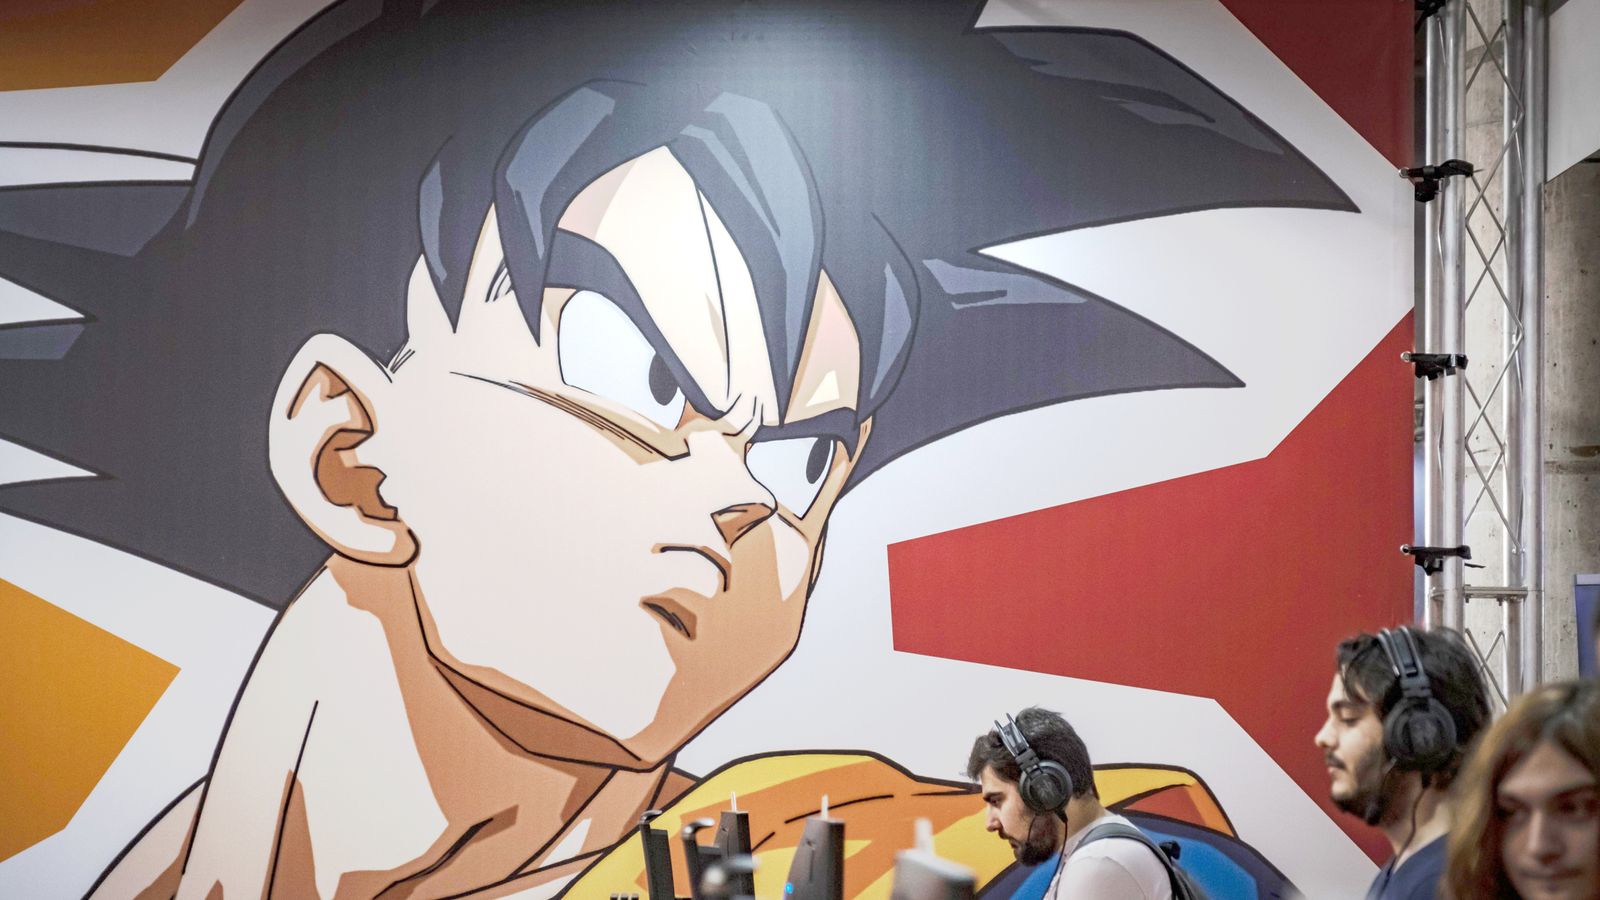 Akira Toriyama: Manga artist who created Dragon Ball and Dr Slump, dies